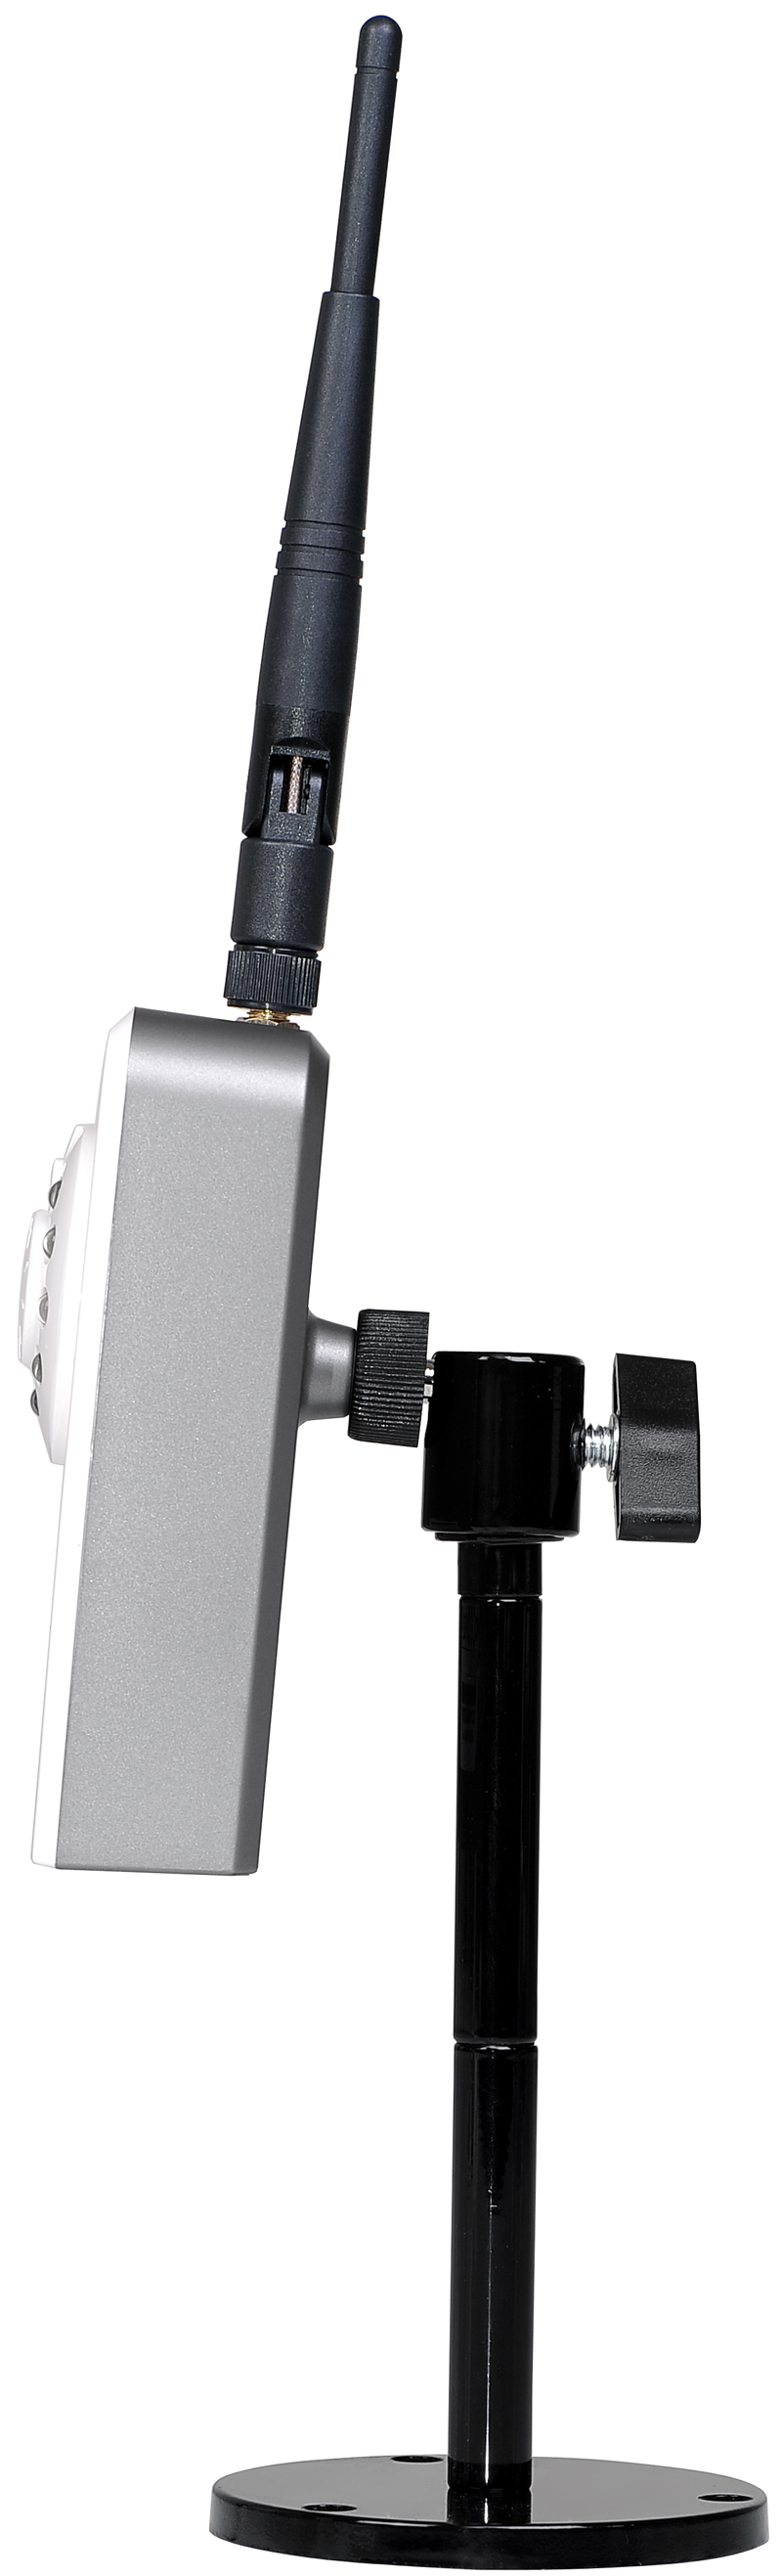 EDIMAX IC-3110W - Kamery kompaktowe IP